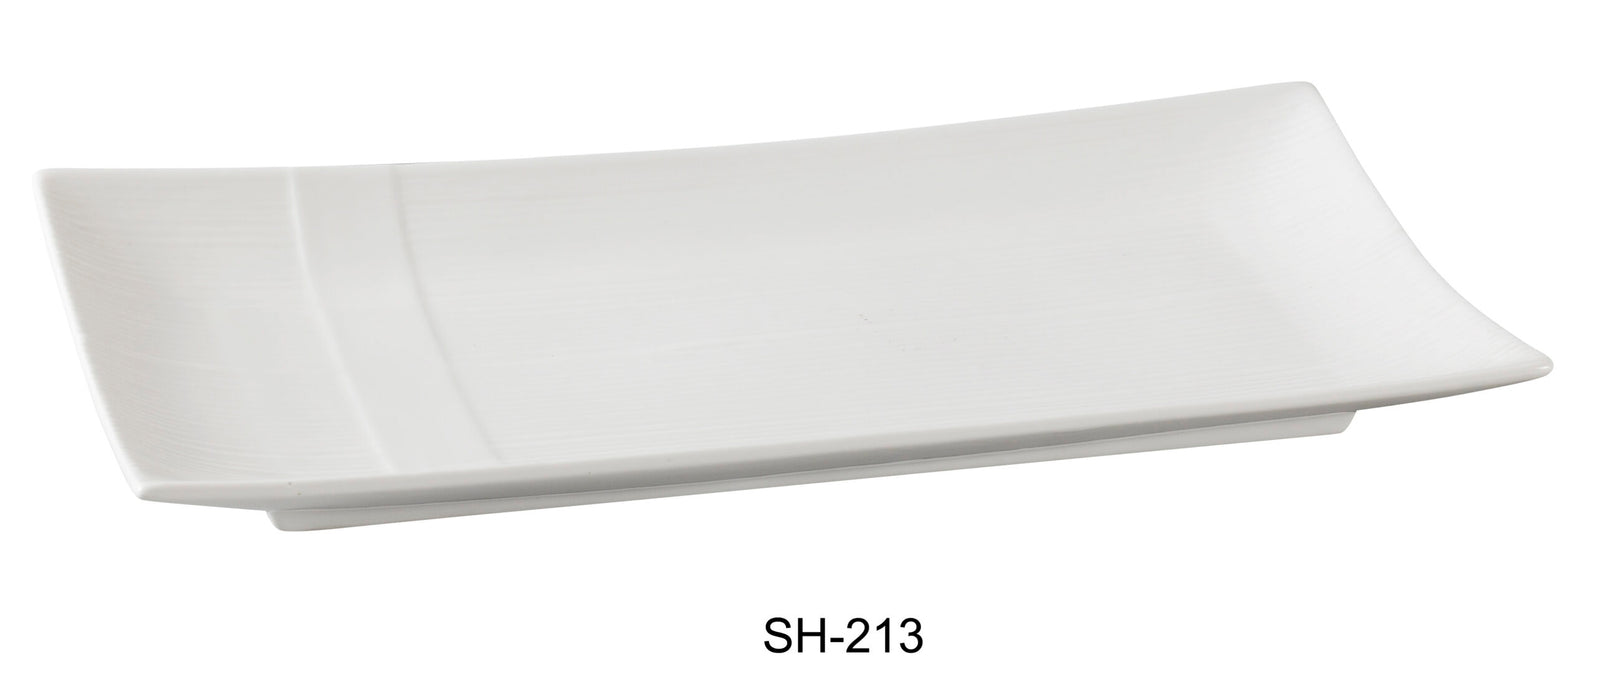 Yanco SH-213 Shanghai Rectangular Plate, 13.5″ Length x 6.5″ Width, China, Bone White (Pack of 12)